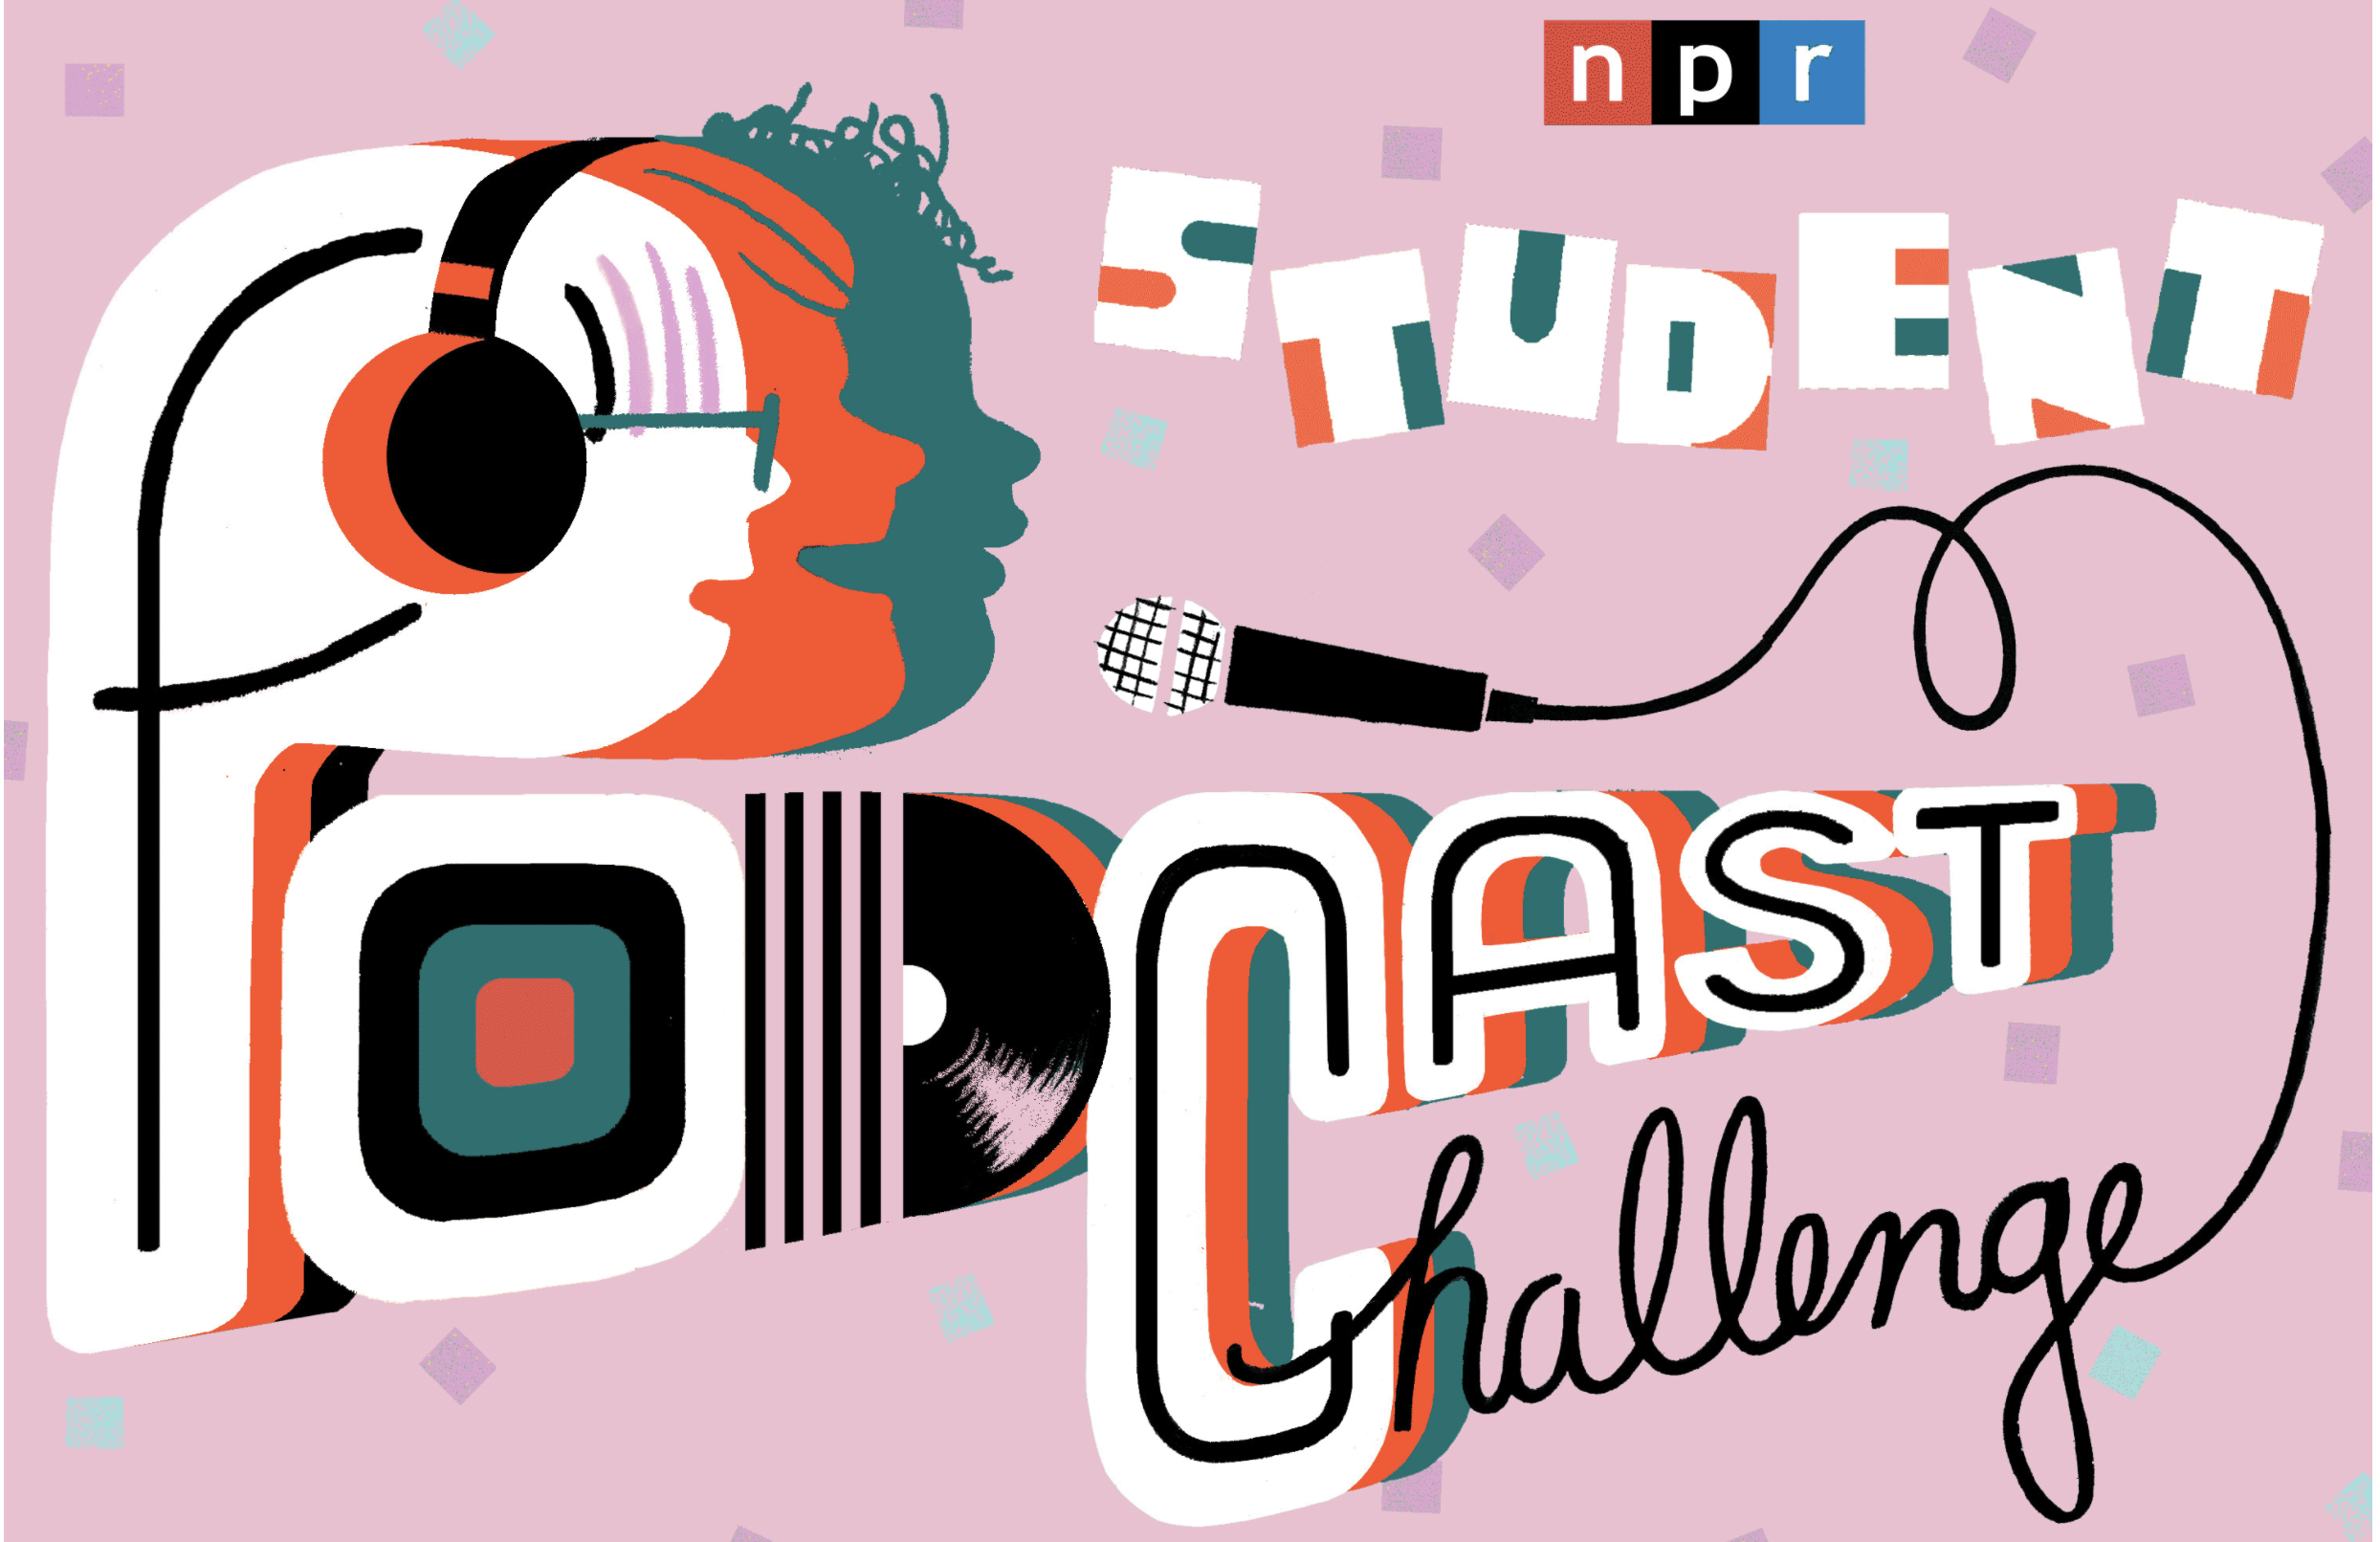 The 2021 NPR Student Podcast Challenge logo.